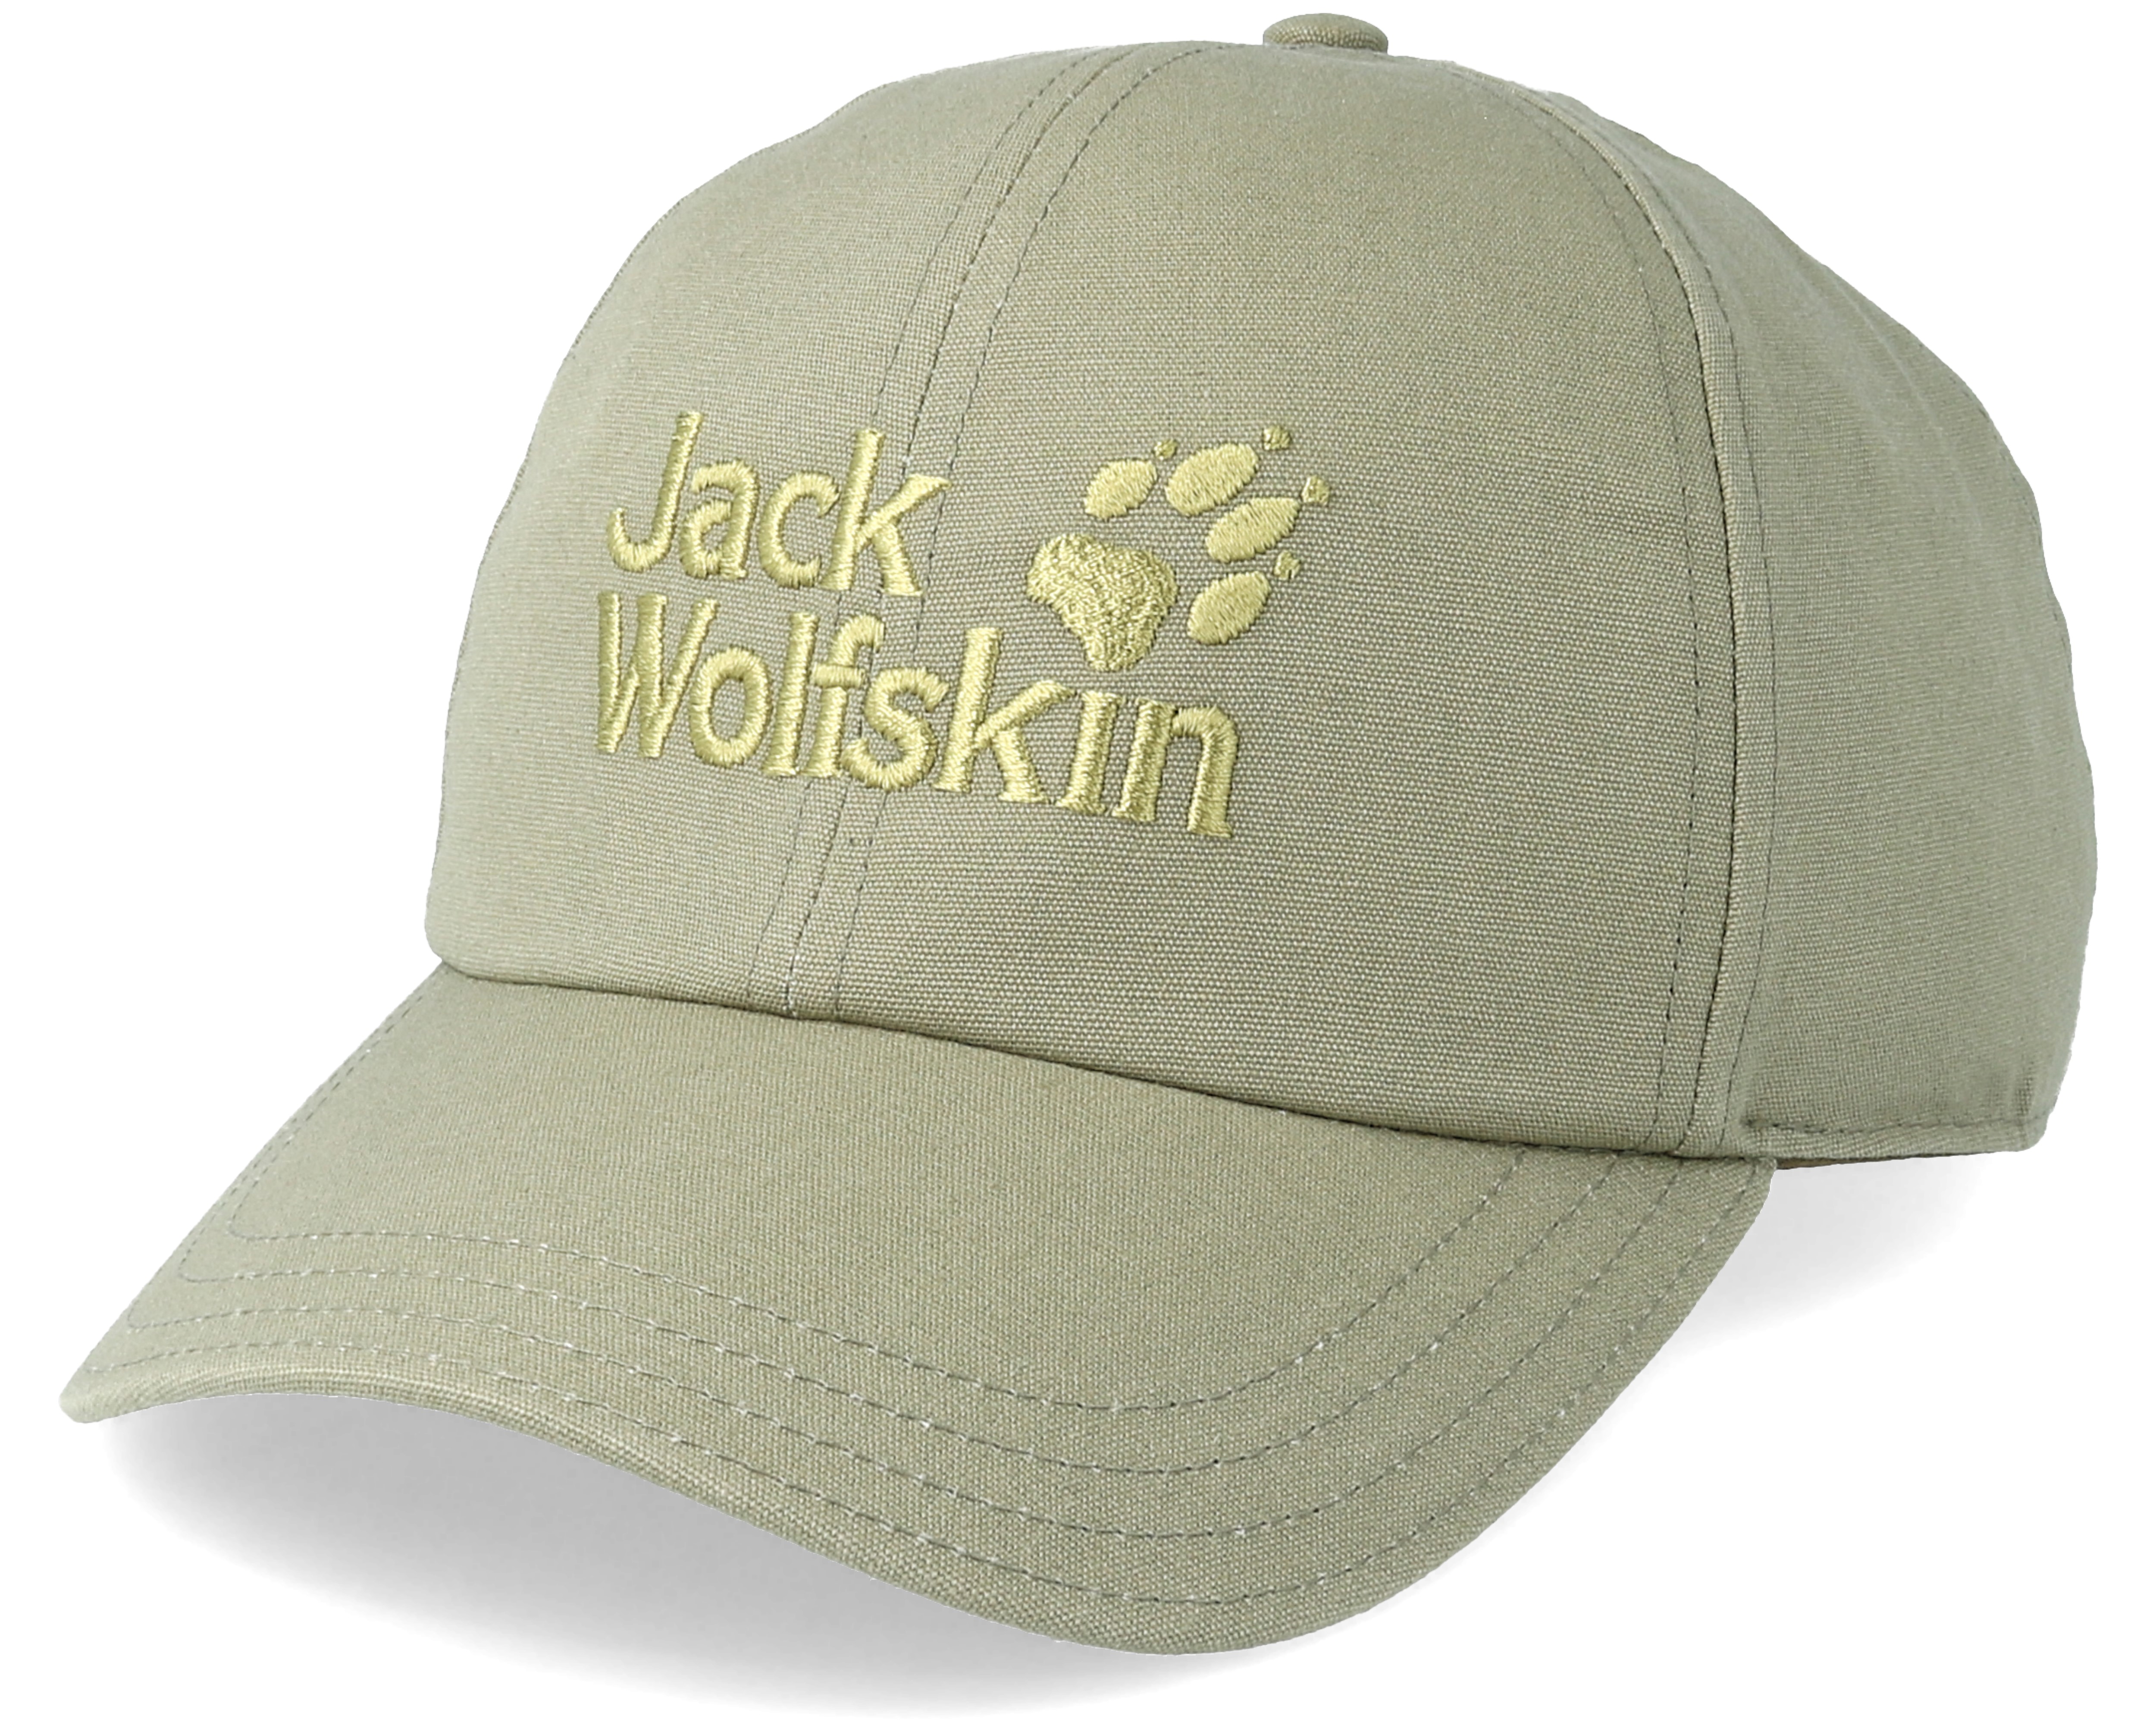 Baseball Cap Khaki Green Adjustable - Jack Wolfskin cap